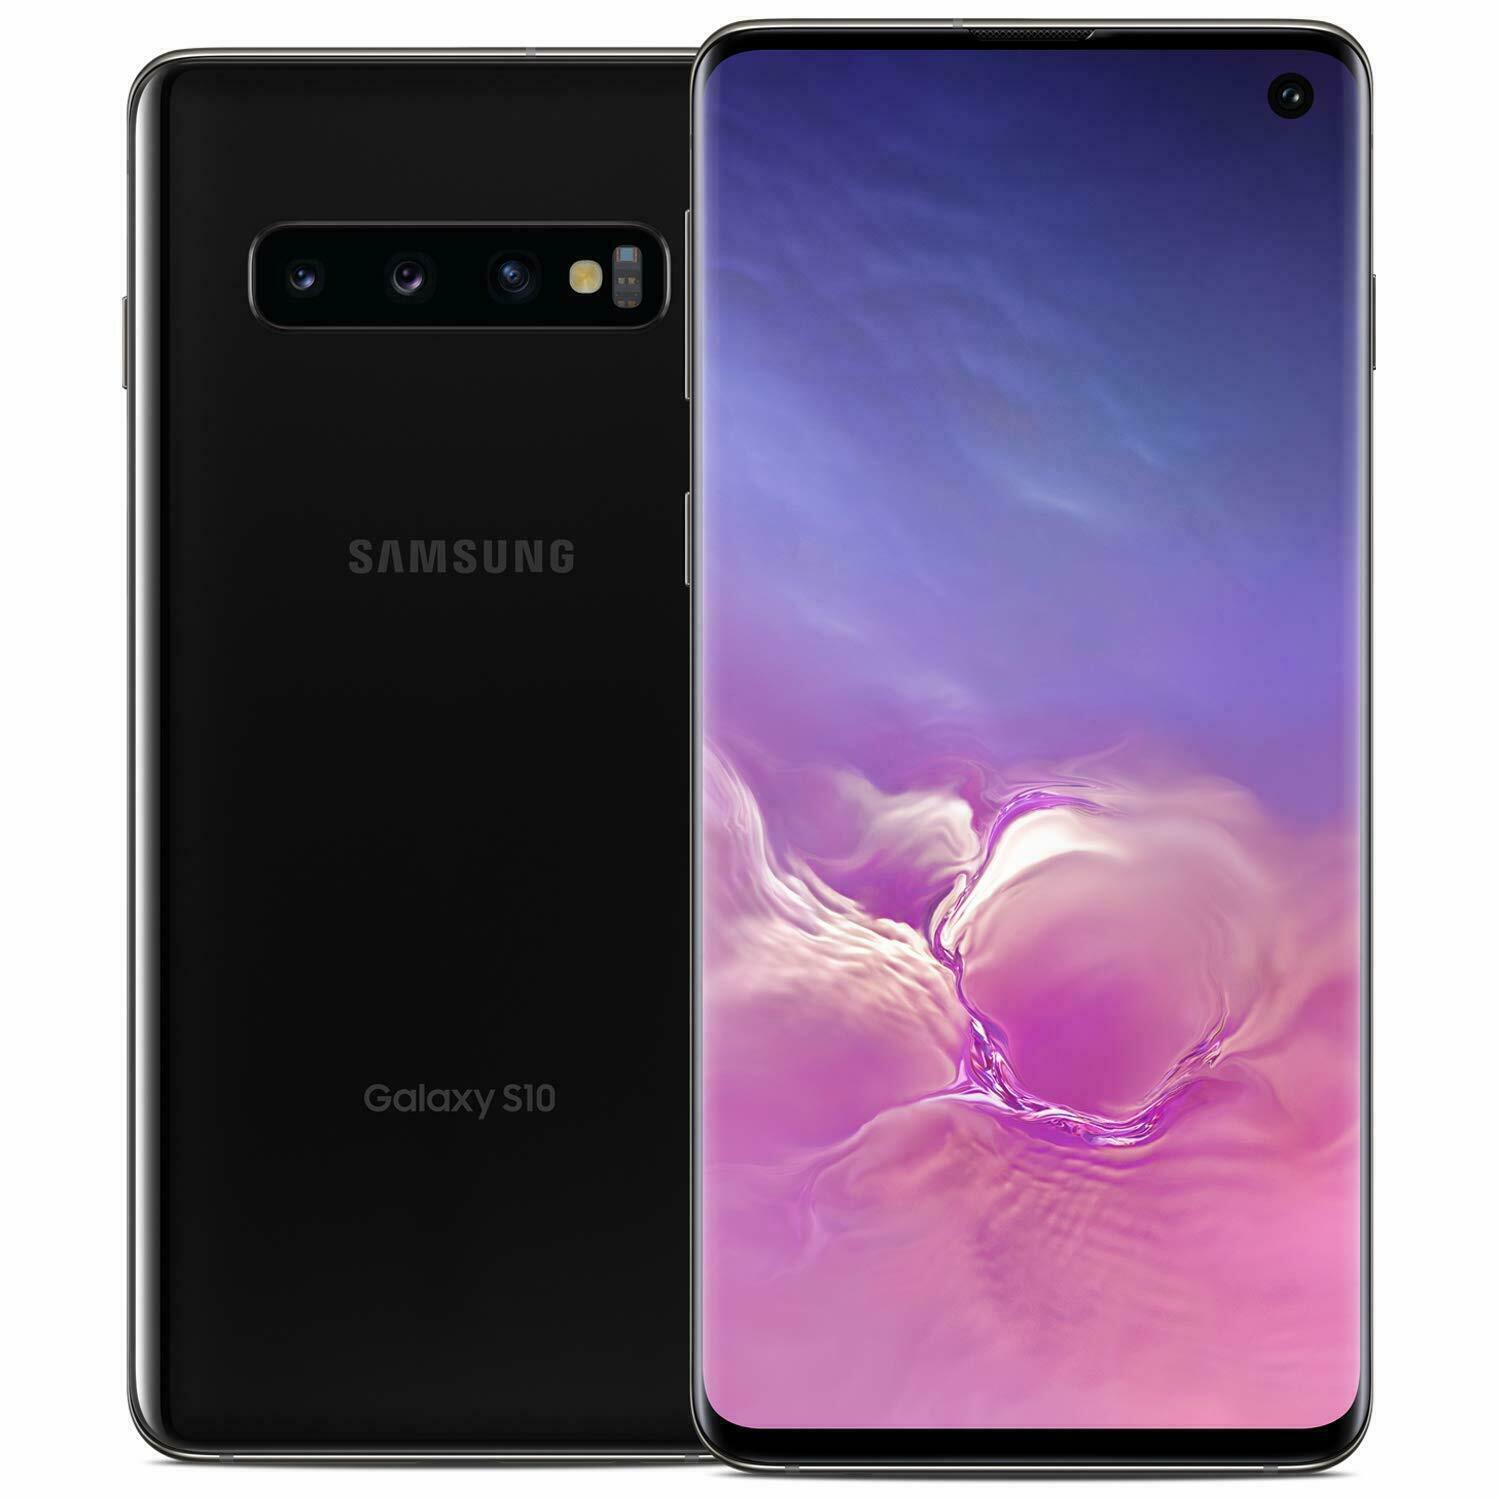 Samsung Smart Phone Galaxy S10 - 128GB (Unlocked) Prism Black